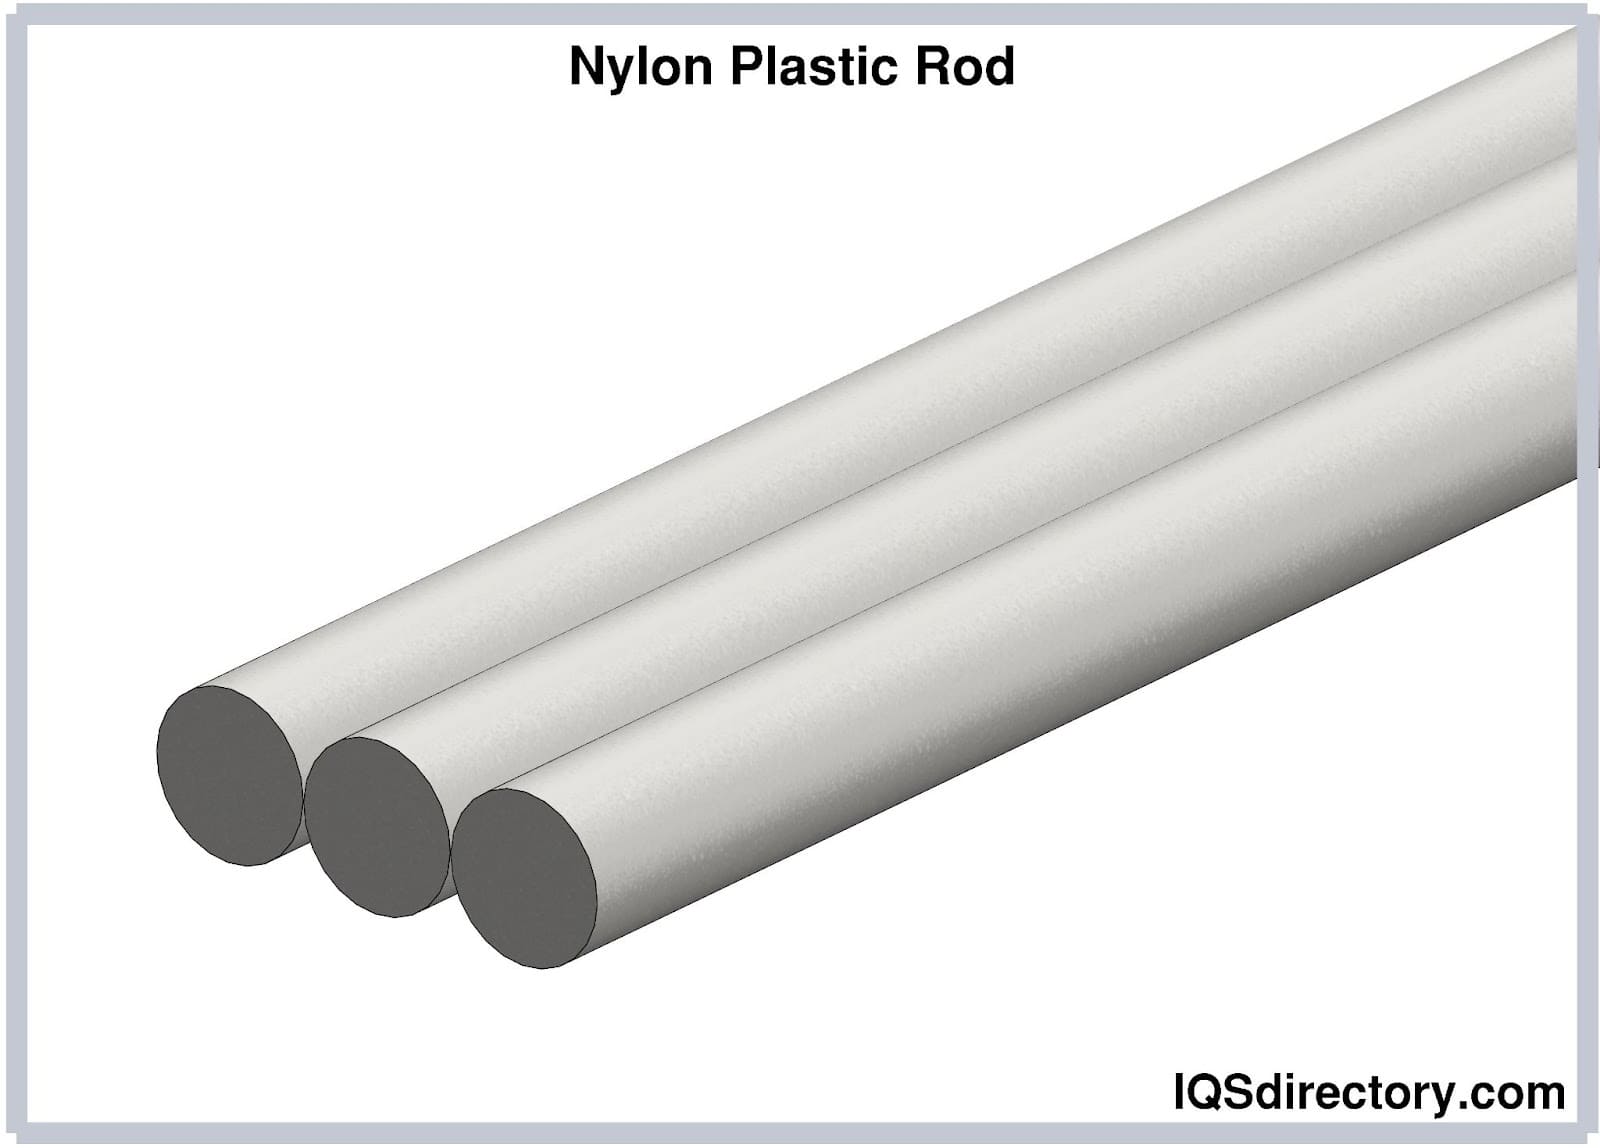 Nylon Plastic Rod